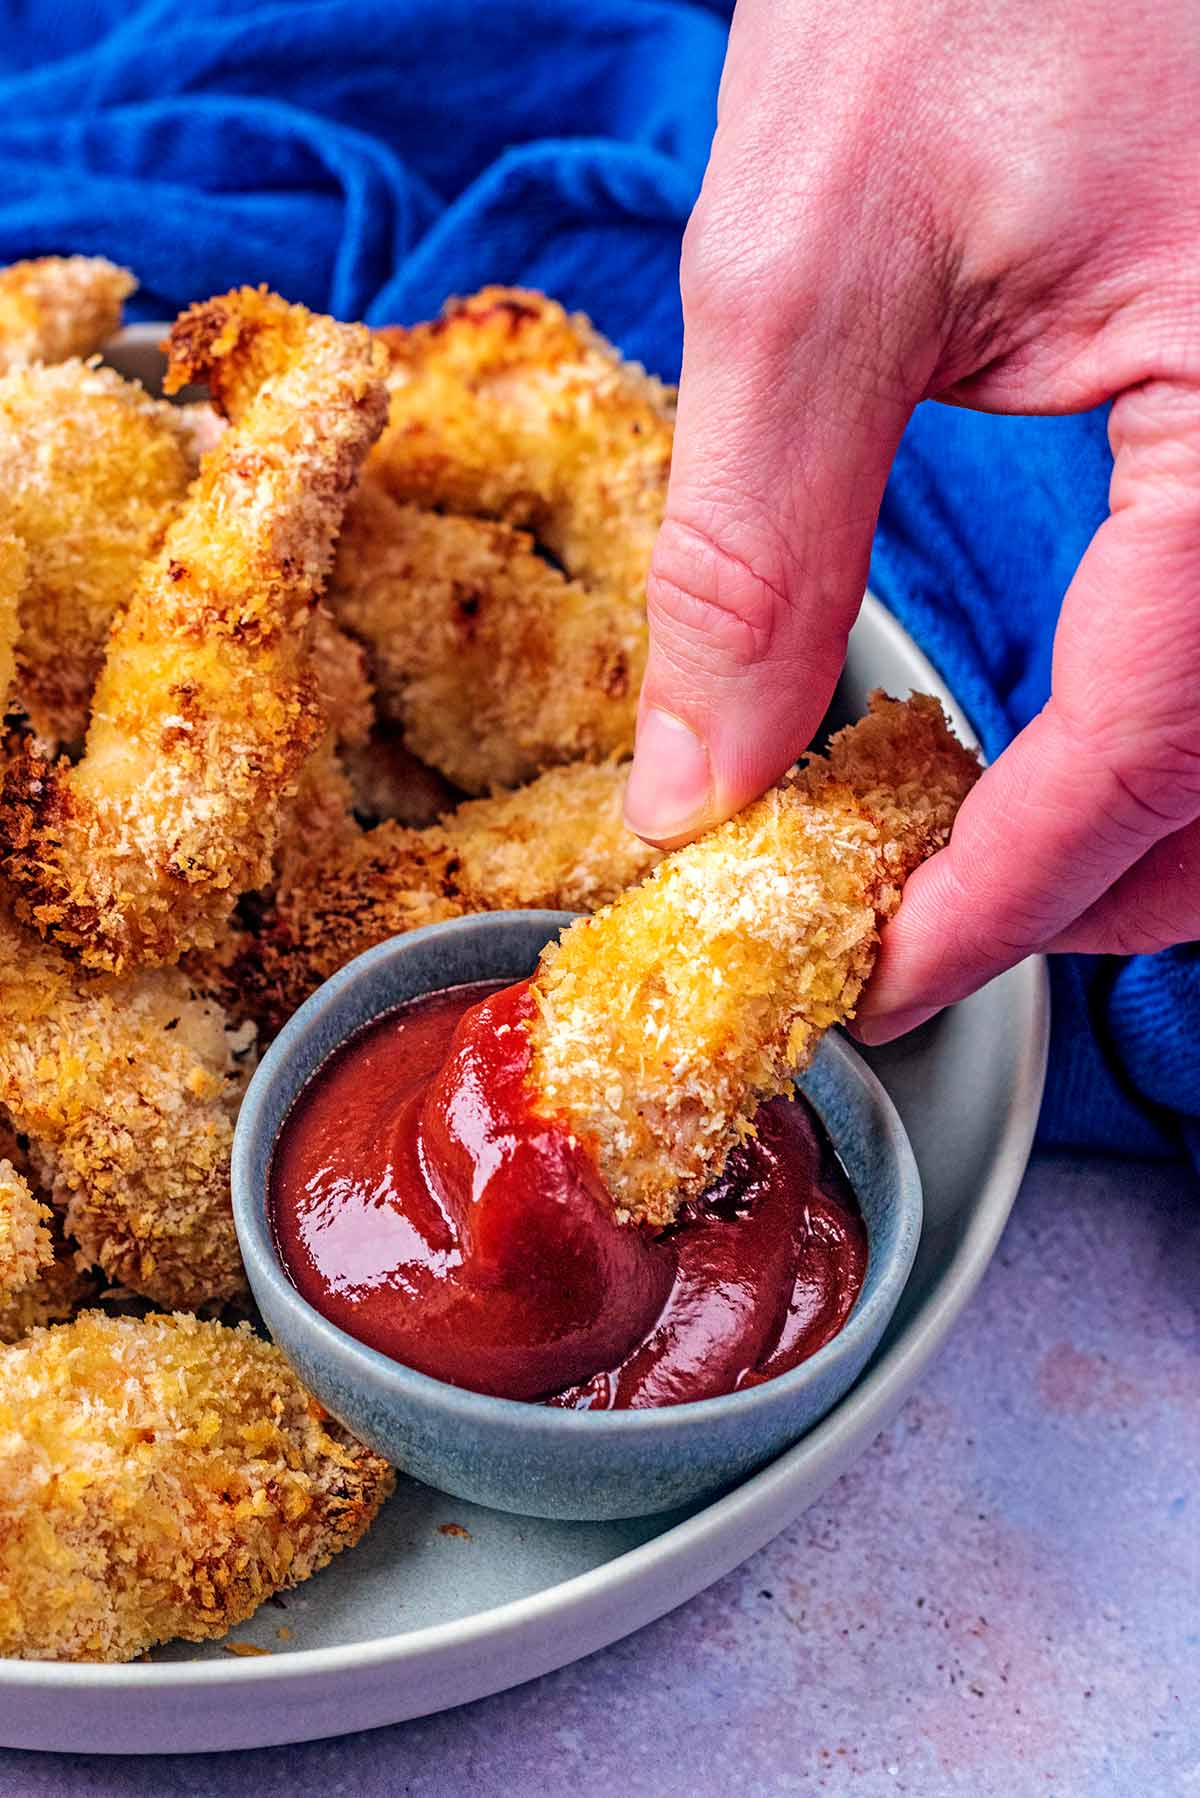 A hand dipping a chicken goujon into some ketchup.